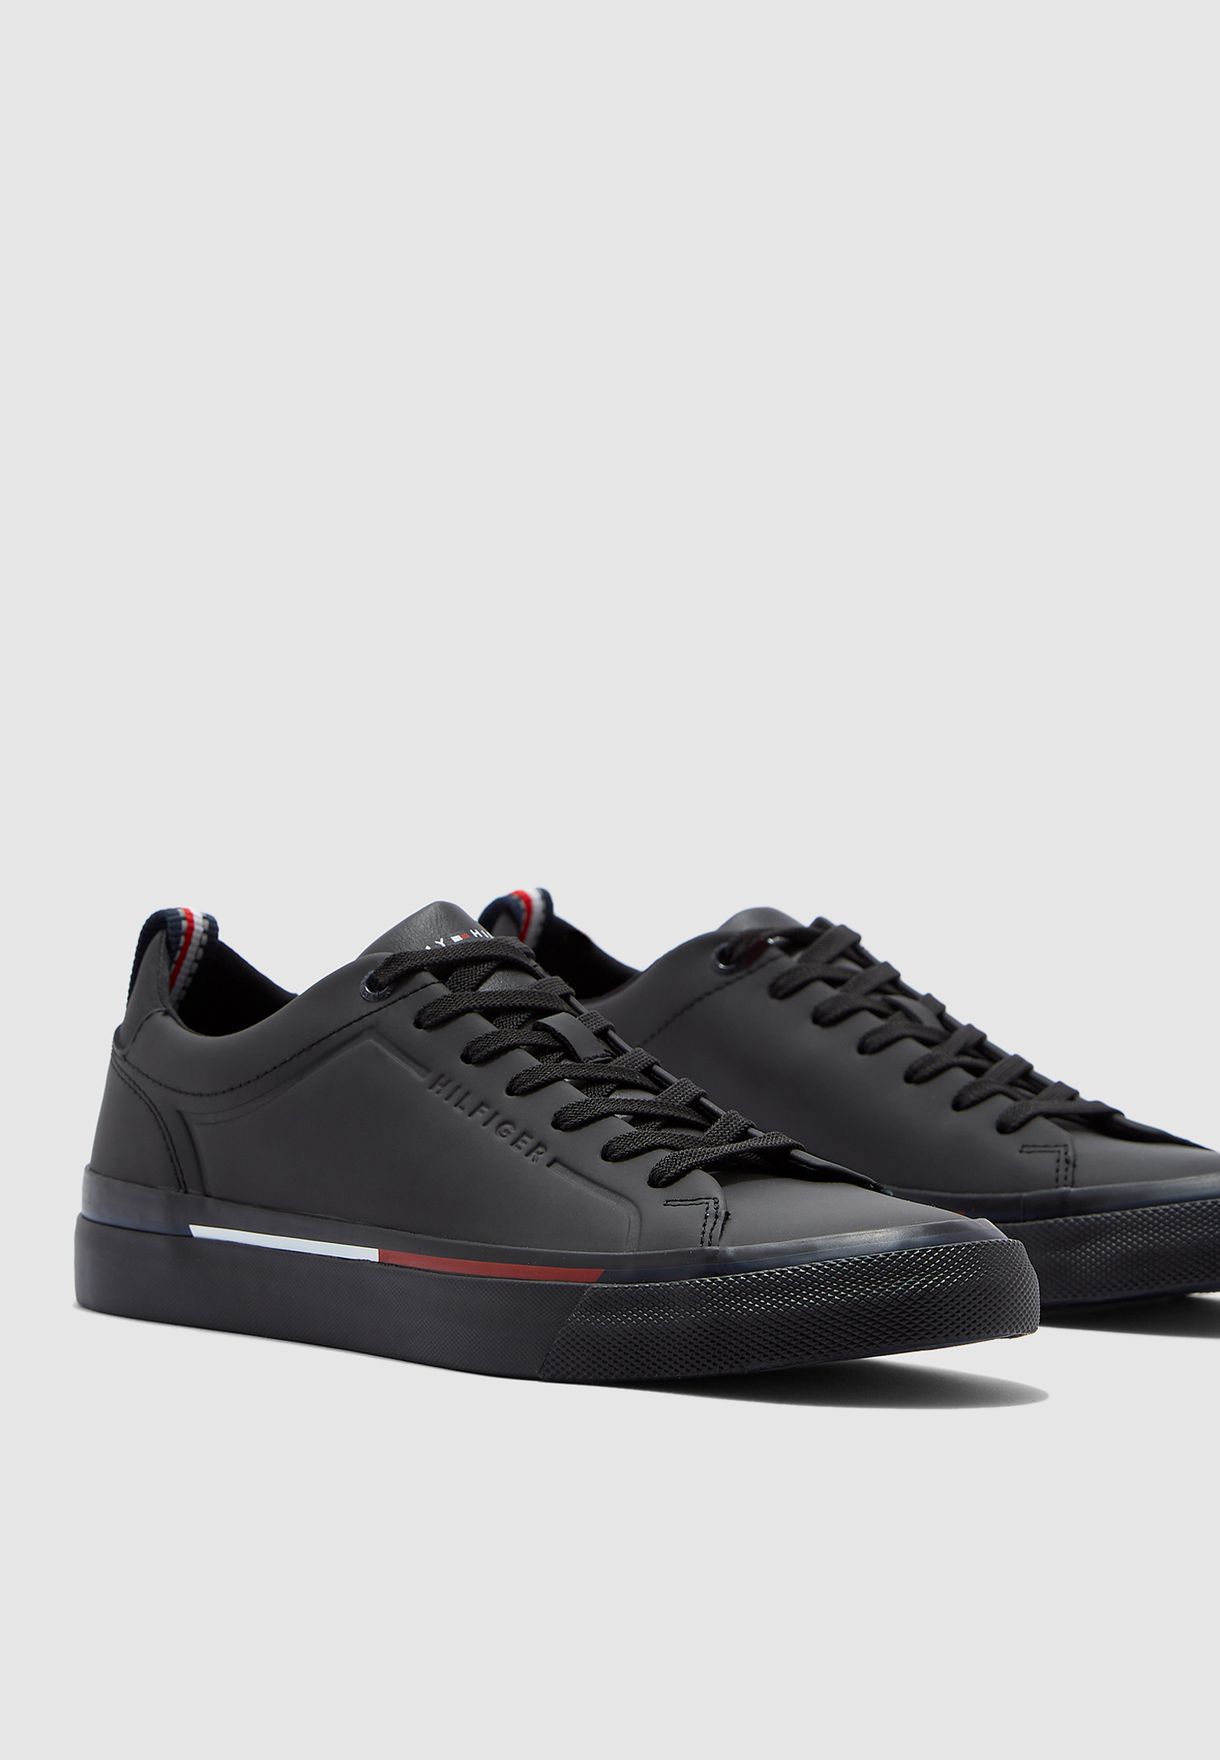 Tommy Hilfiger Leather Sneaker Black Spain, SAVE 45% - mpgc.net